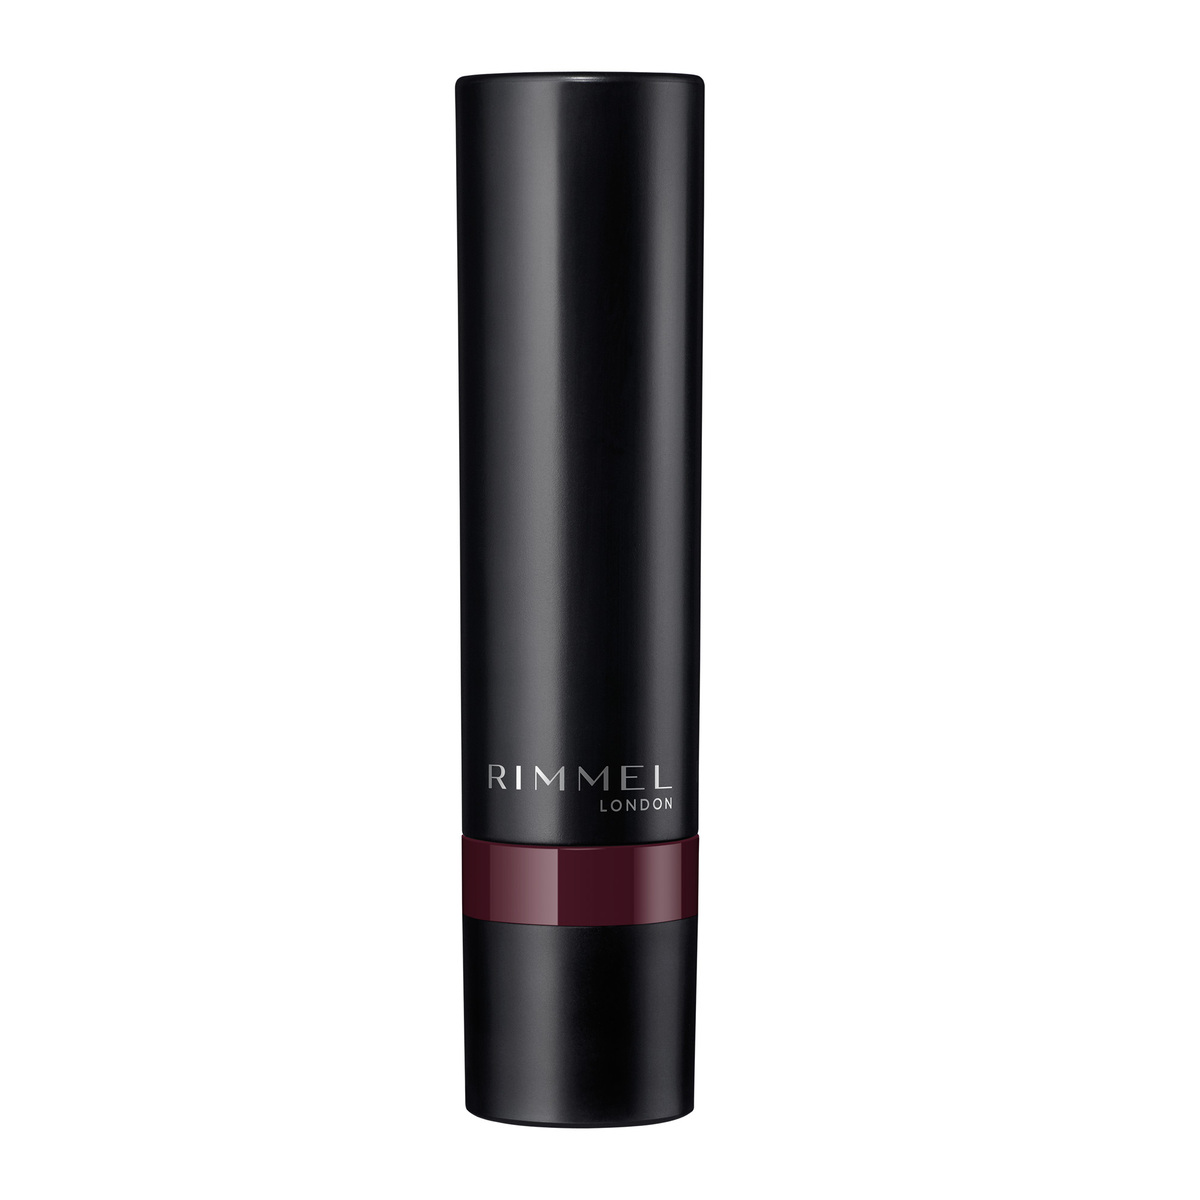 Rimmel London Lasting Finish Matte Lipstick, 840 Mulberry, 1.2 g